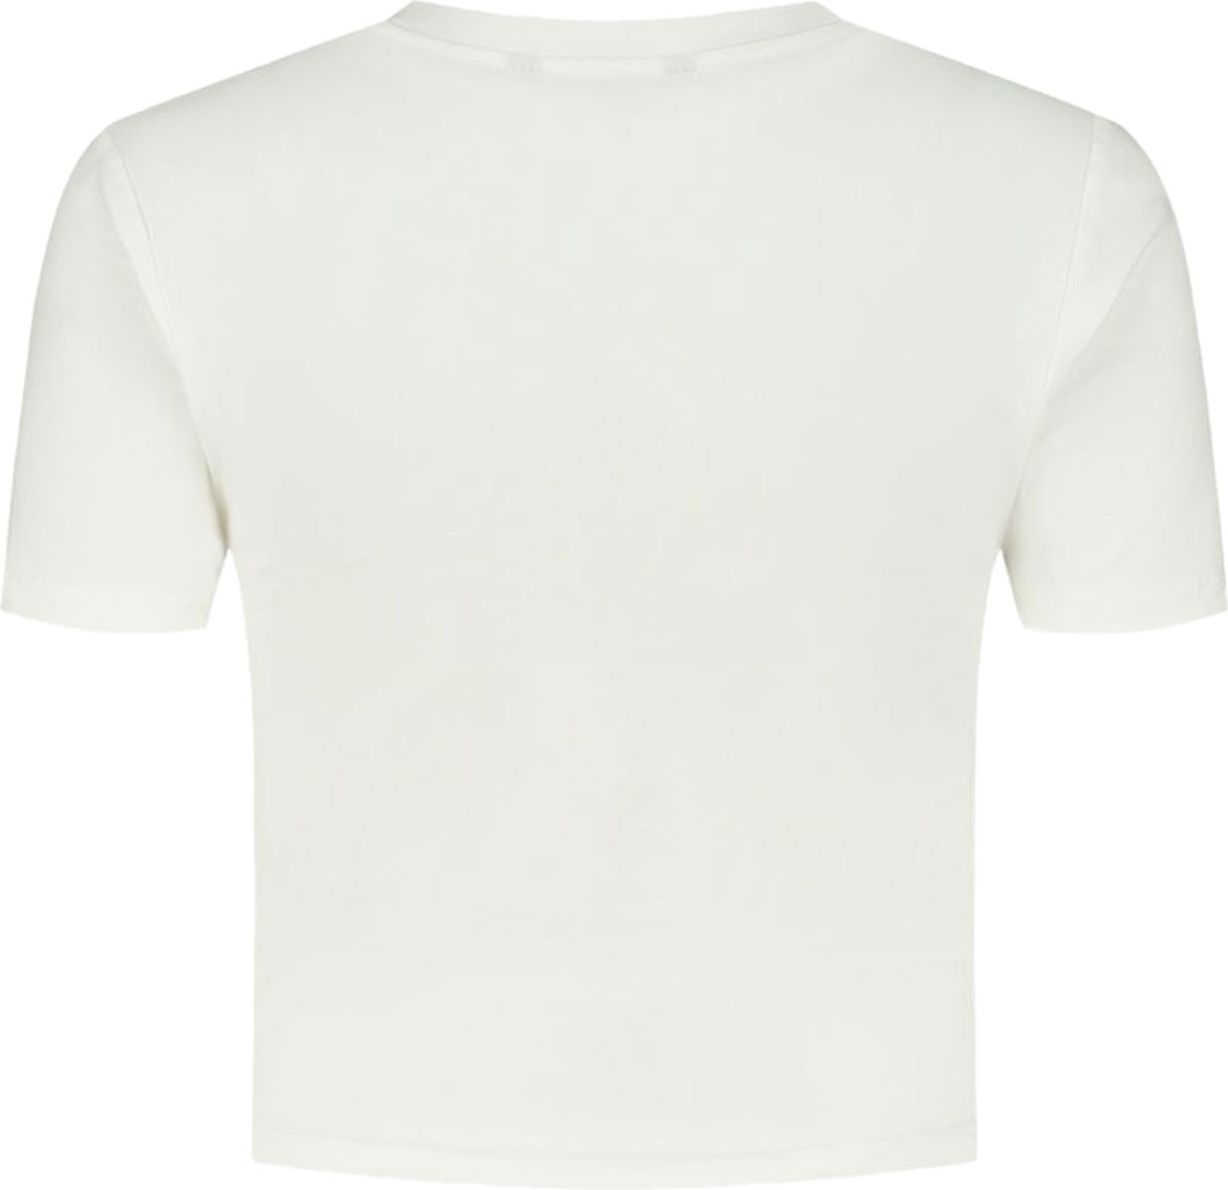 Nikkie Cropped Cord T-shirt Star White White